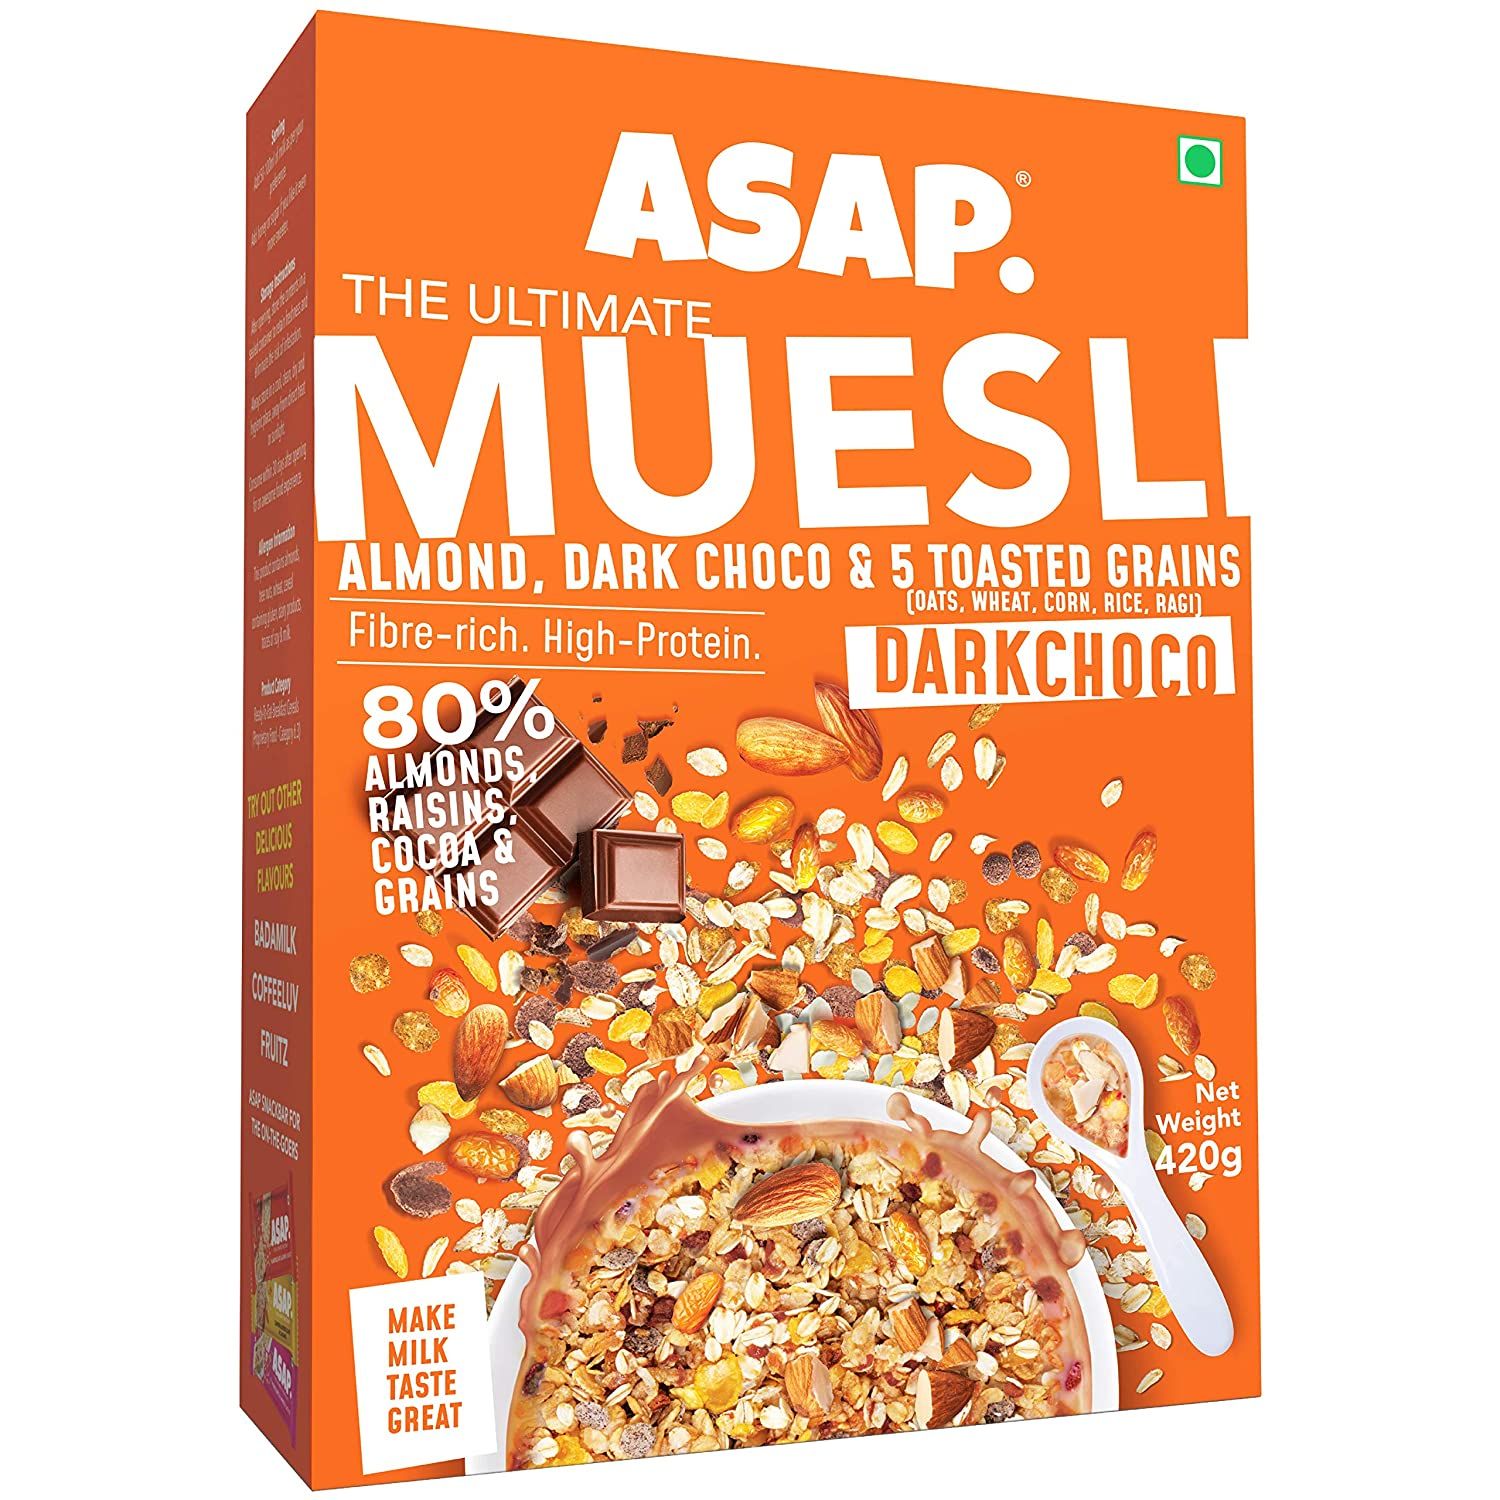 ASAP Ultimate Muesli Dark Choco Power of 5 Toasted Grains Image